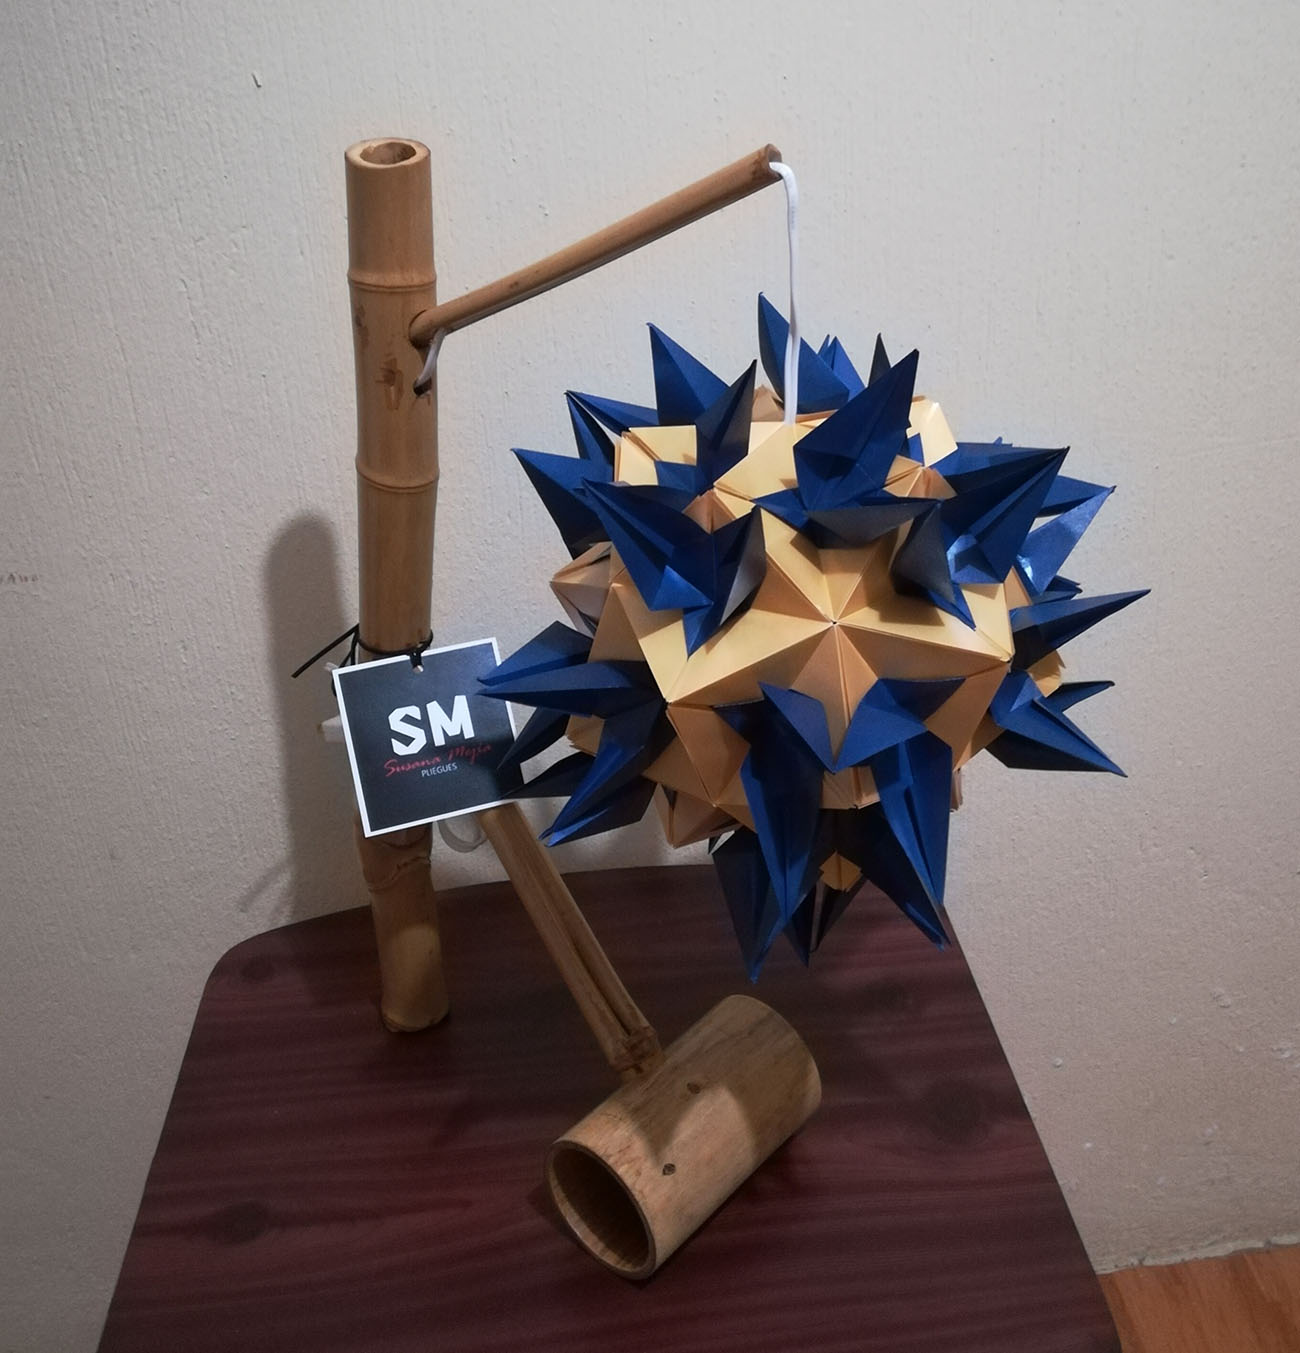  Pliegues Susana Mejía. Lámpara de origami azul.